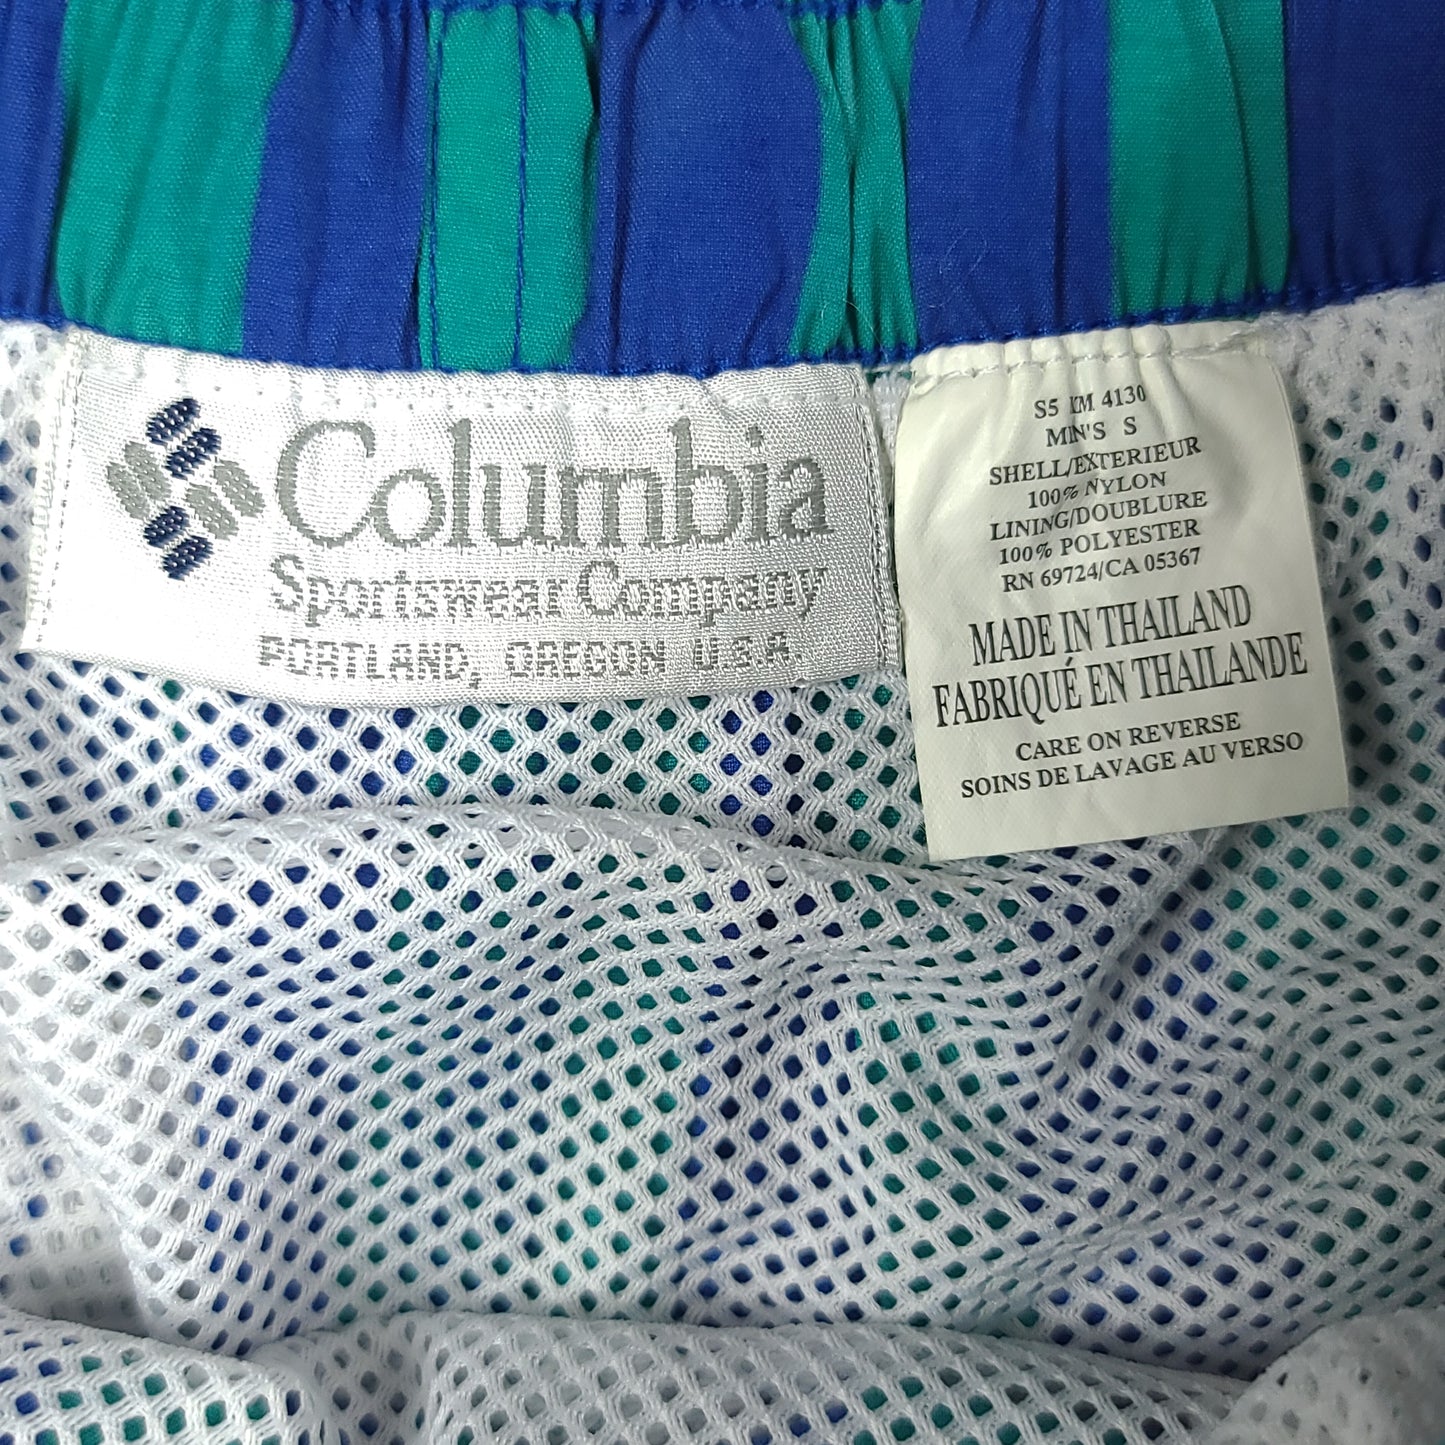 Vintage Columbia Blue Green Striped Nylon Shorts